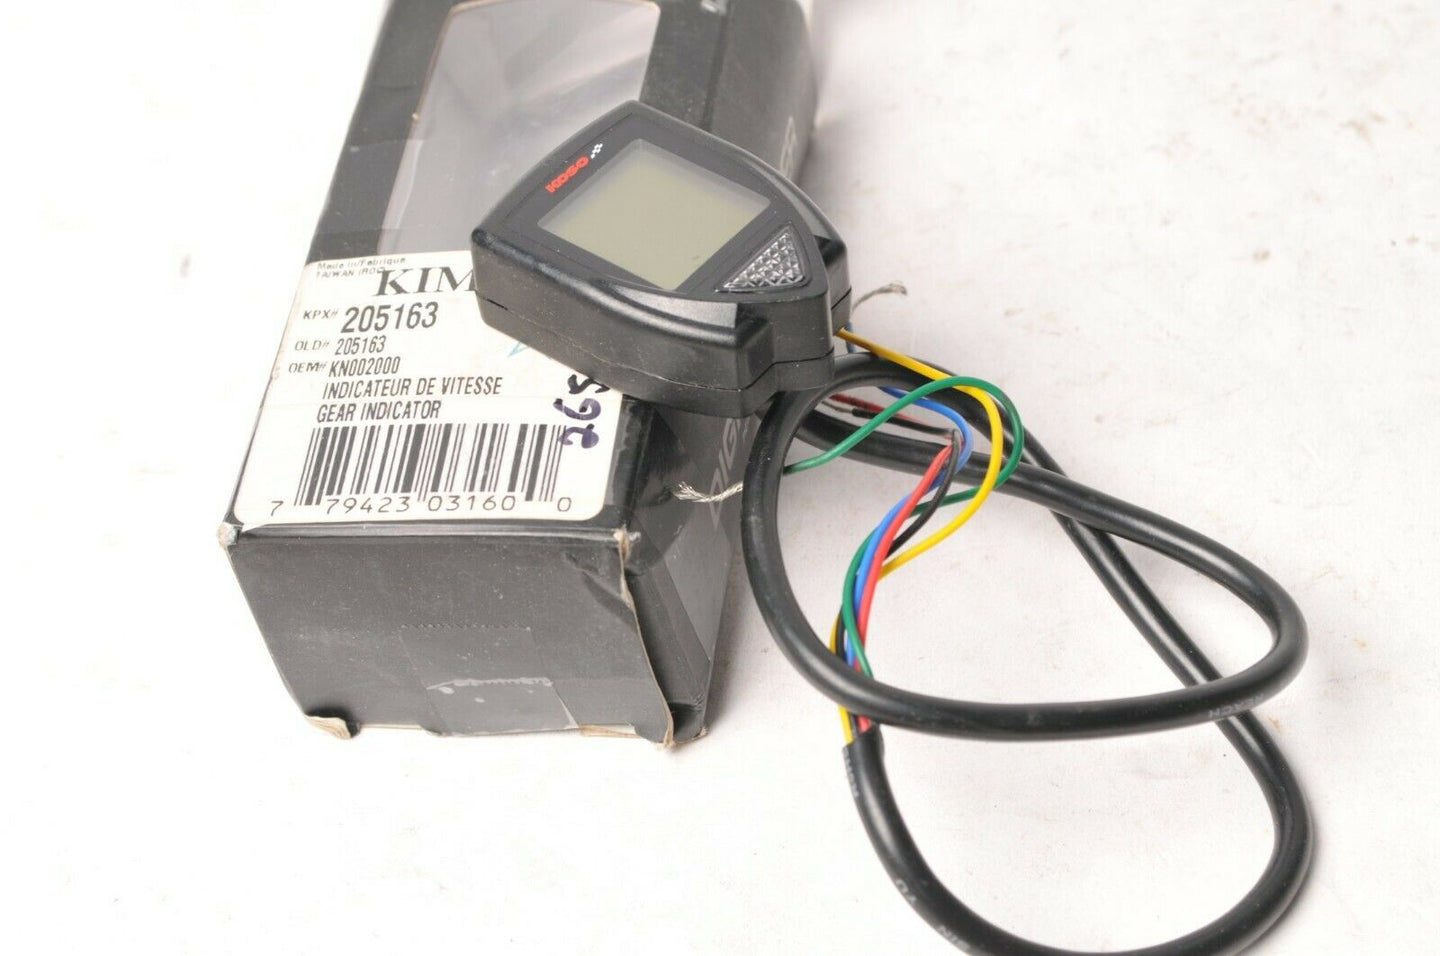 Koso Universal-LED-Frontscheinwerfer GA030000 - Moto-Parts